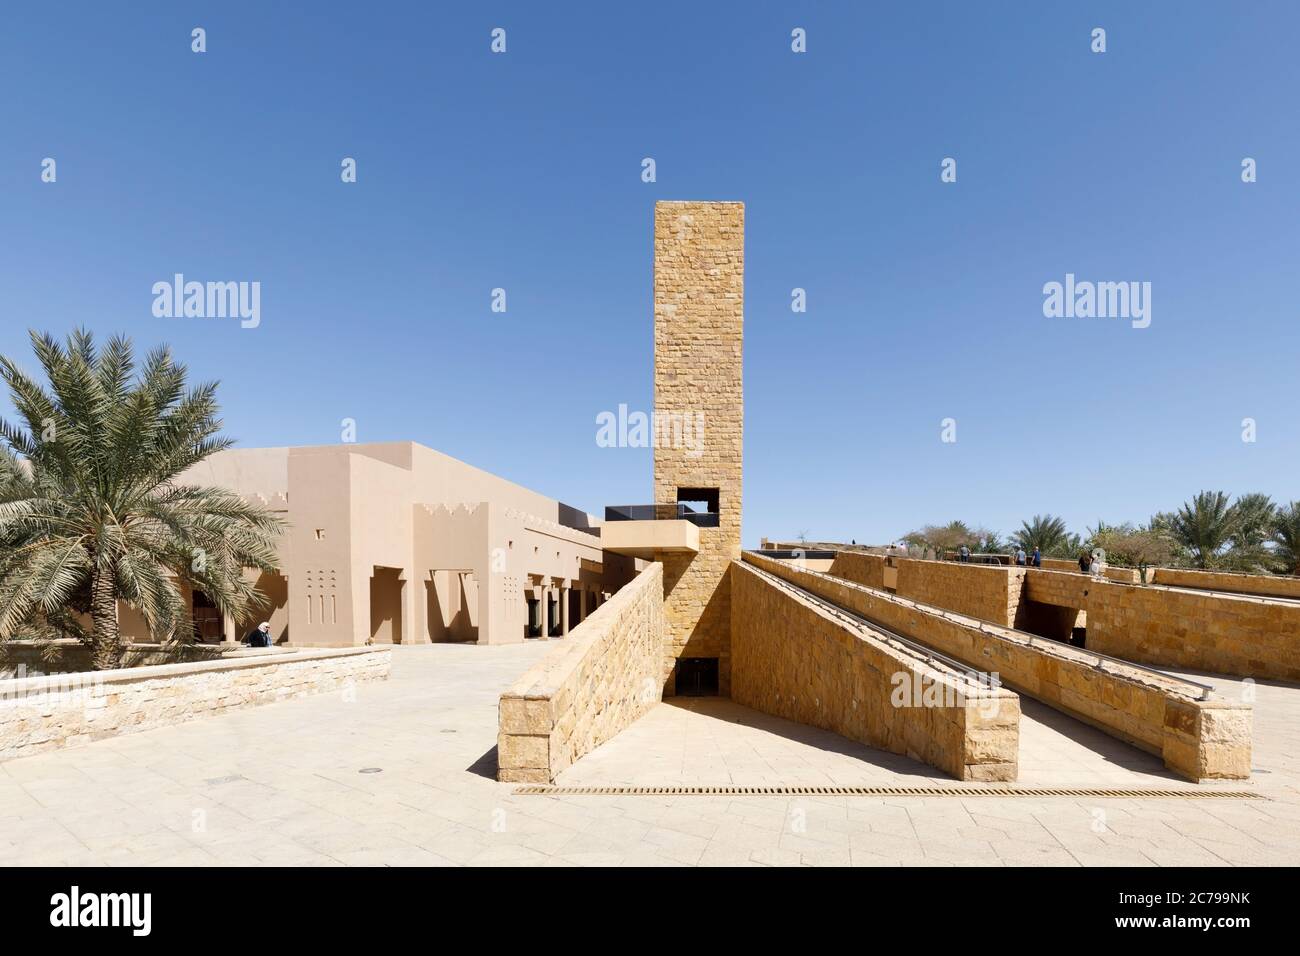 Riad, Saudi Arabia, February 14 2020: Museum and mosque in the historic district Al-Diraiyah of Riyadh in Saudi Arabia Stock Photo